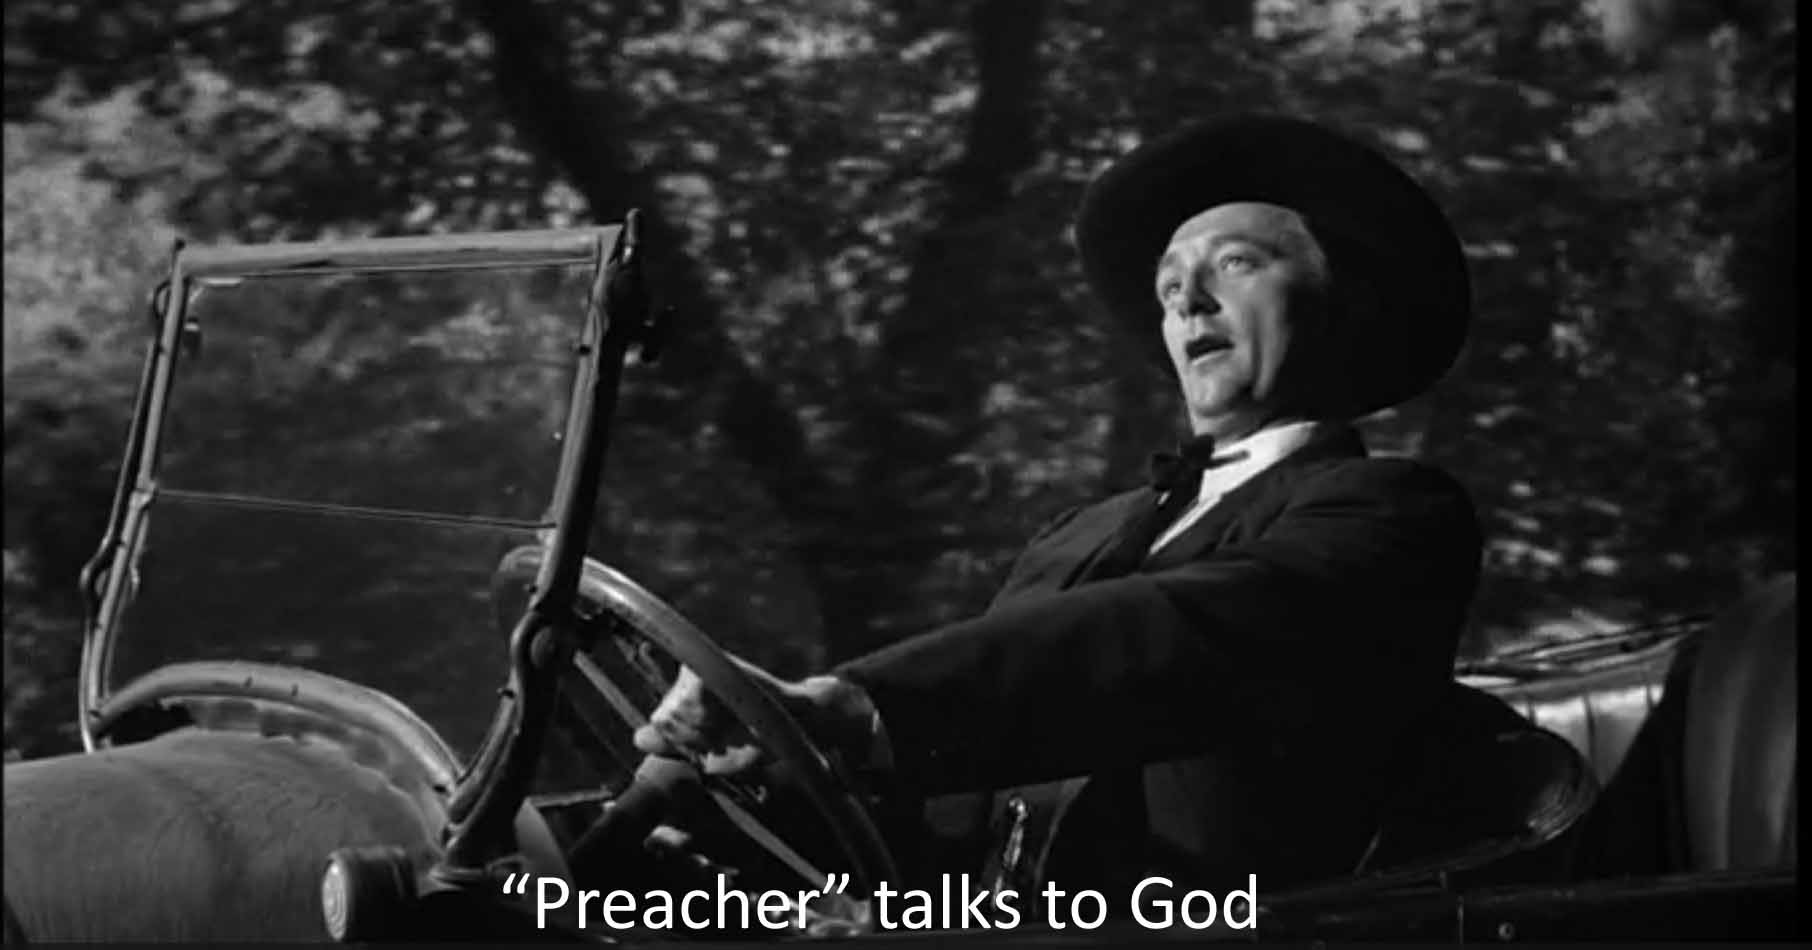 Preacher talks to God